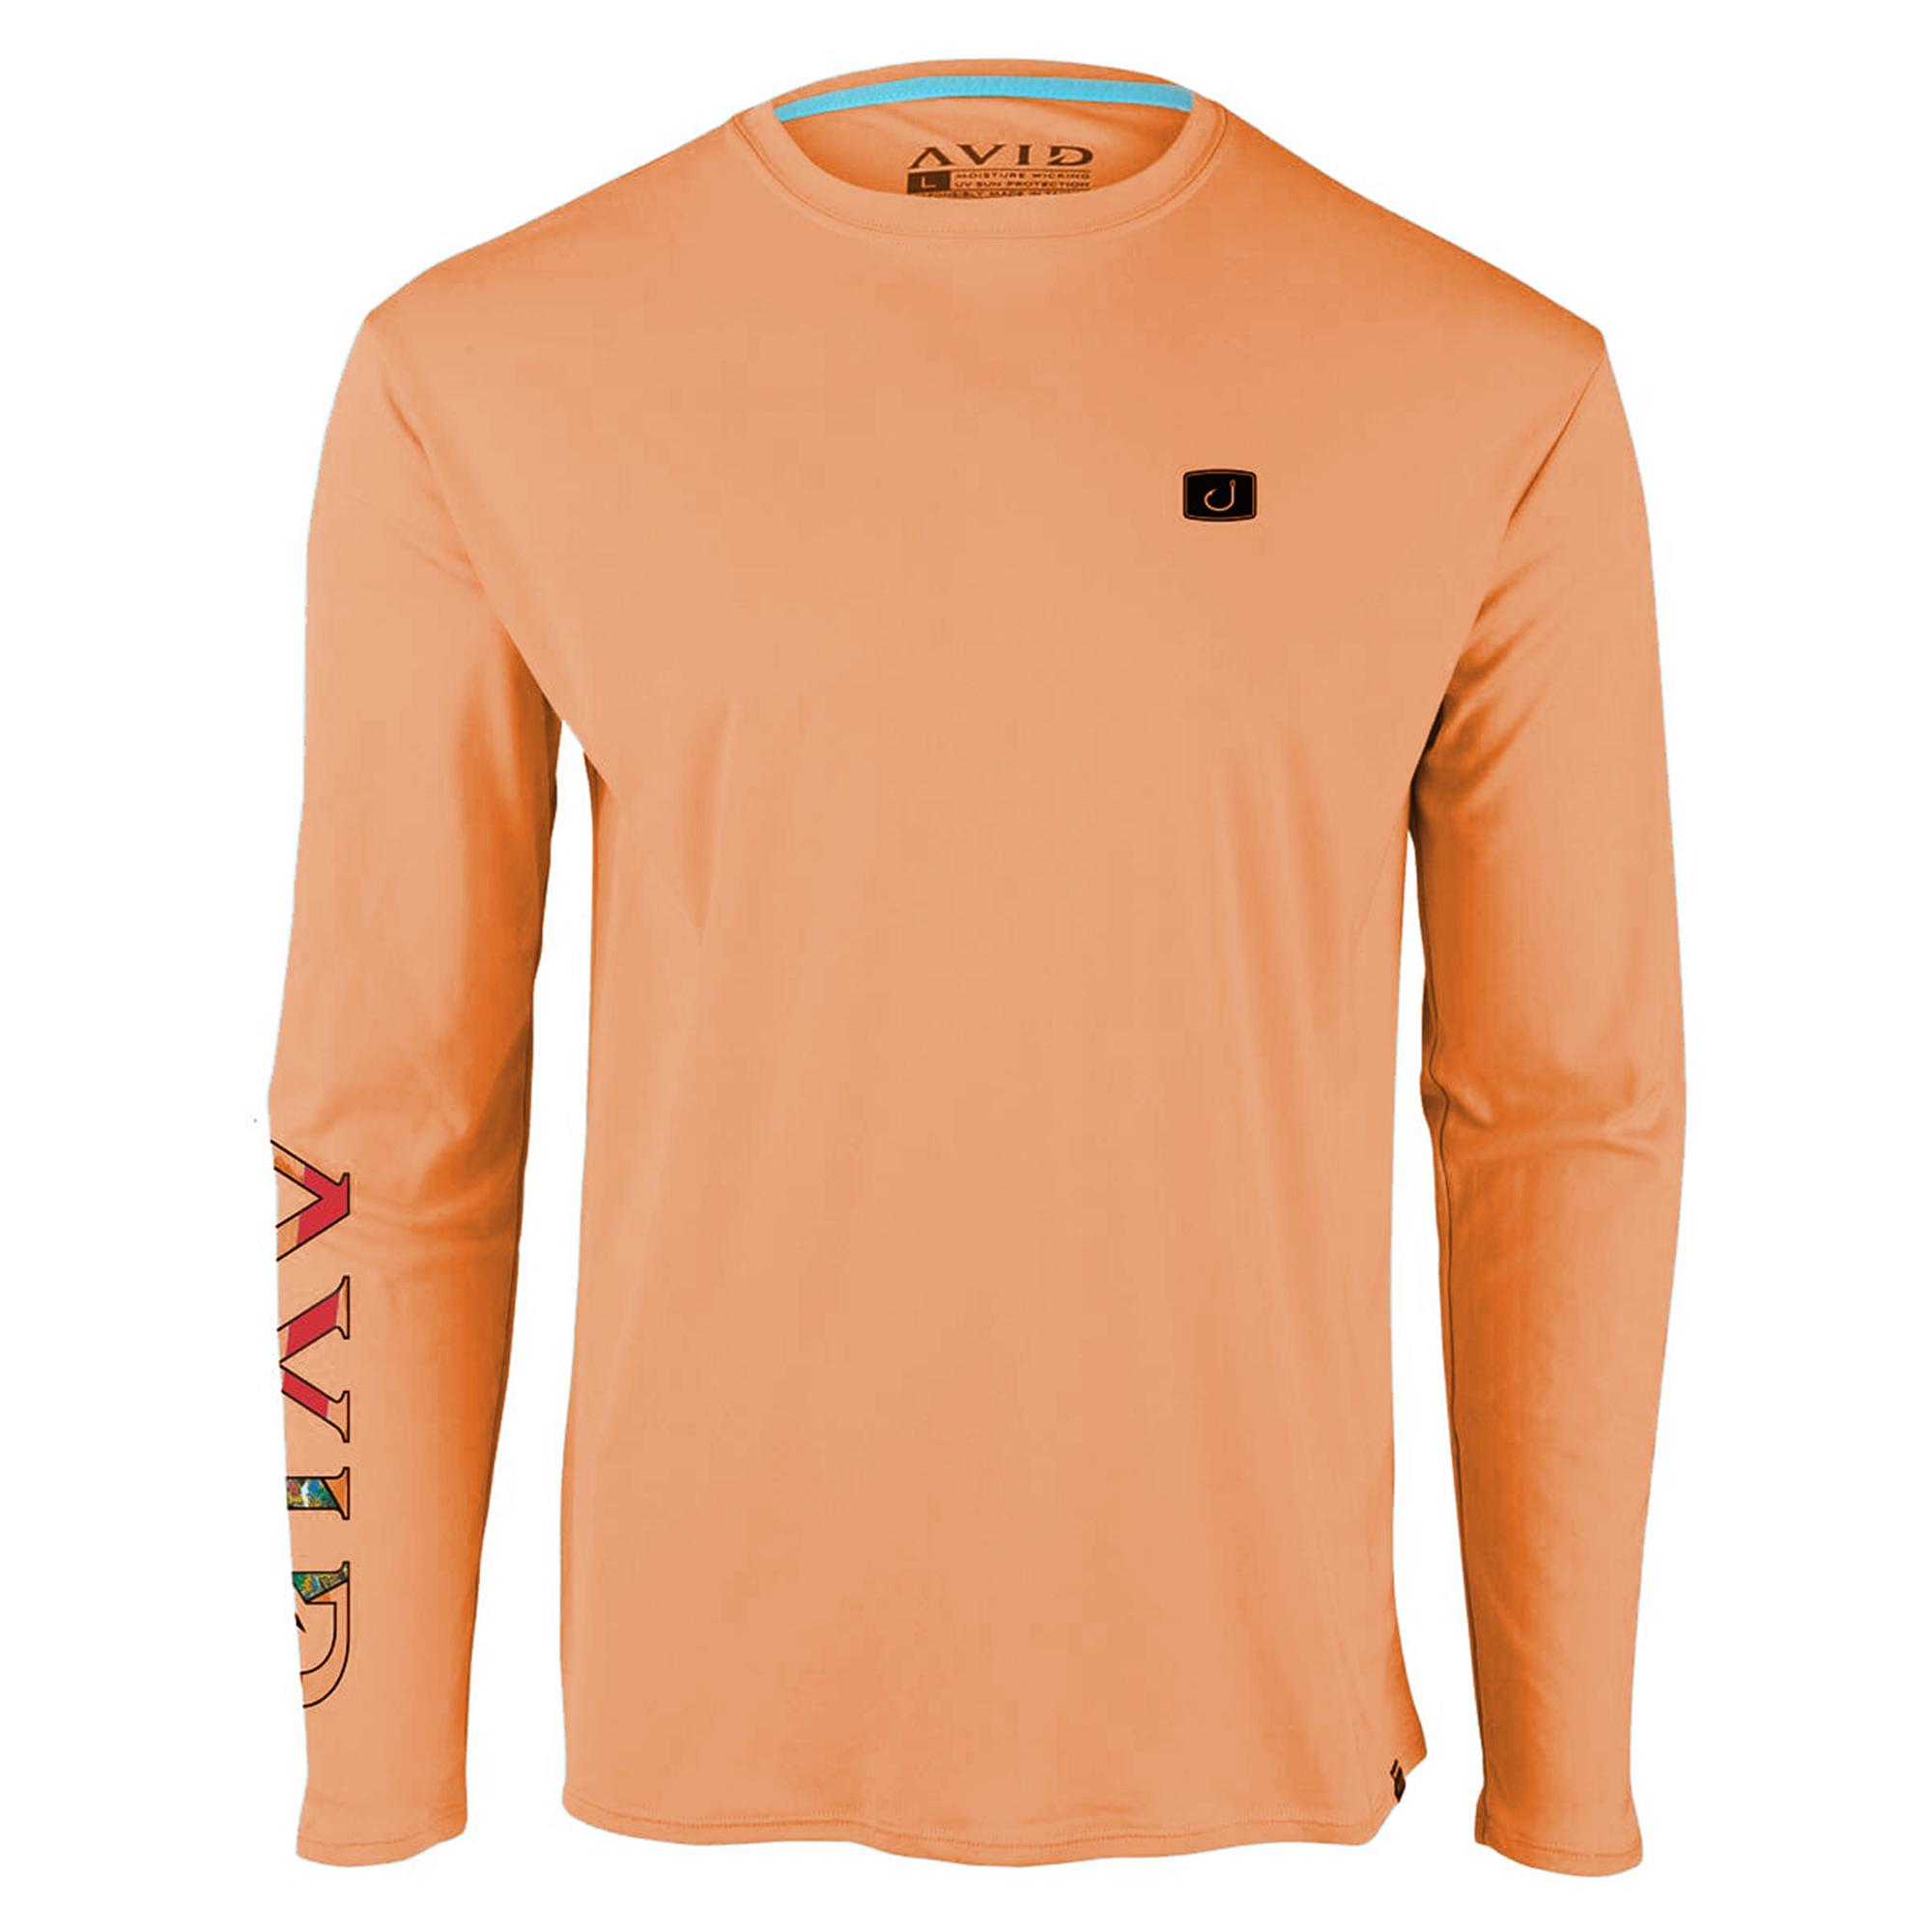 AVID Florida Native AVIDry Long Sleeve Performance Shirt (Men's) - Sunset Front